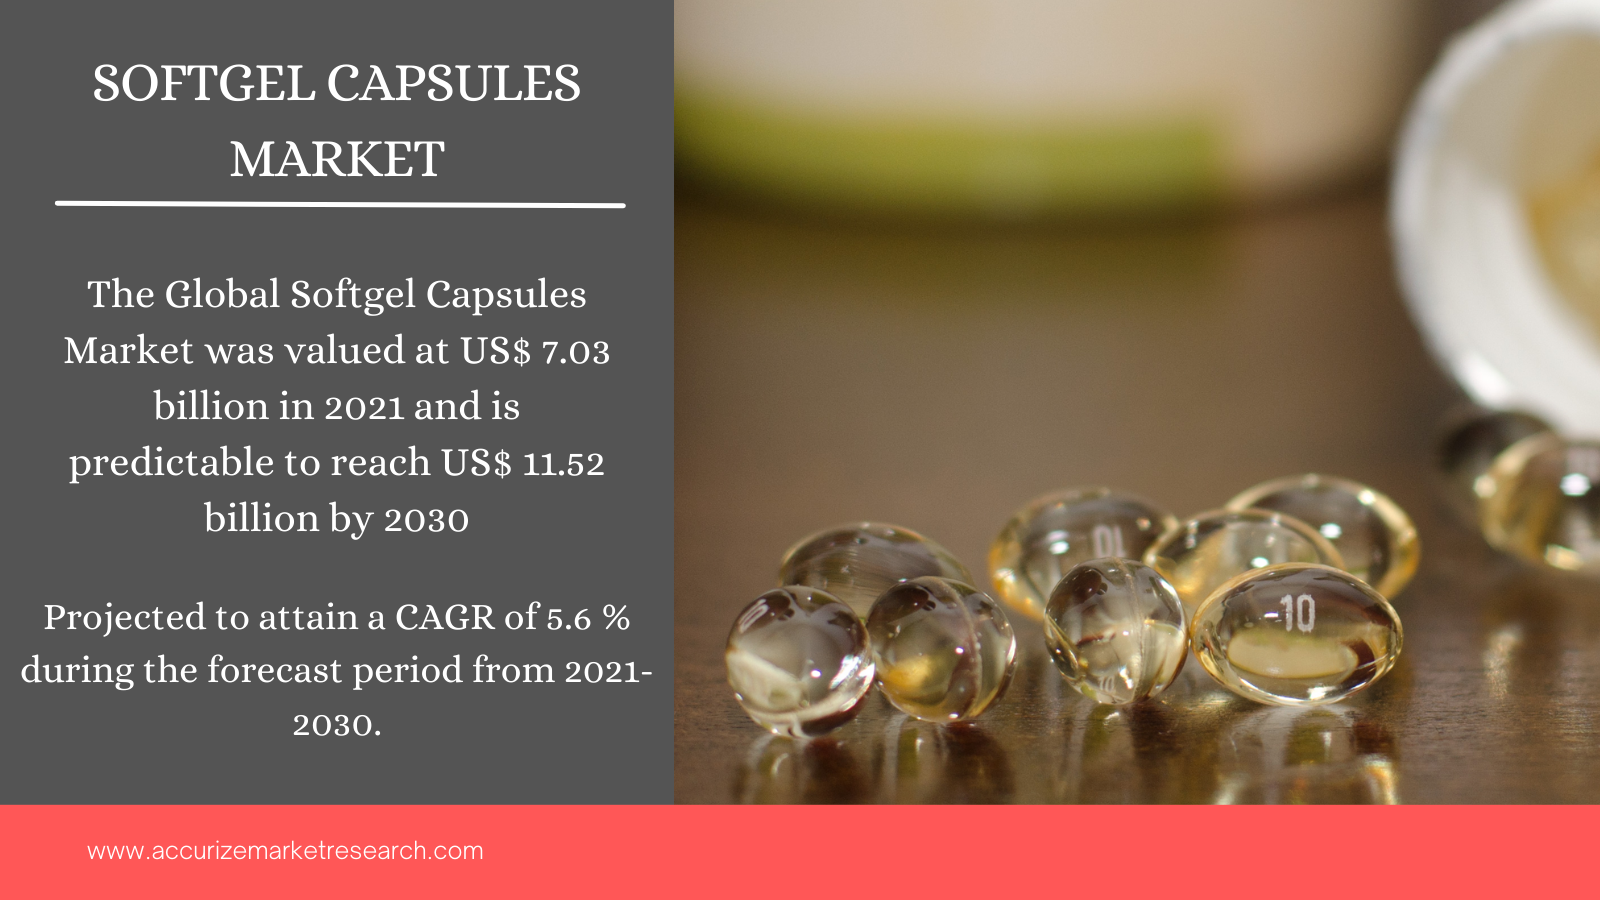 Softgel Capsules Market